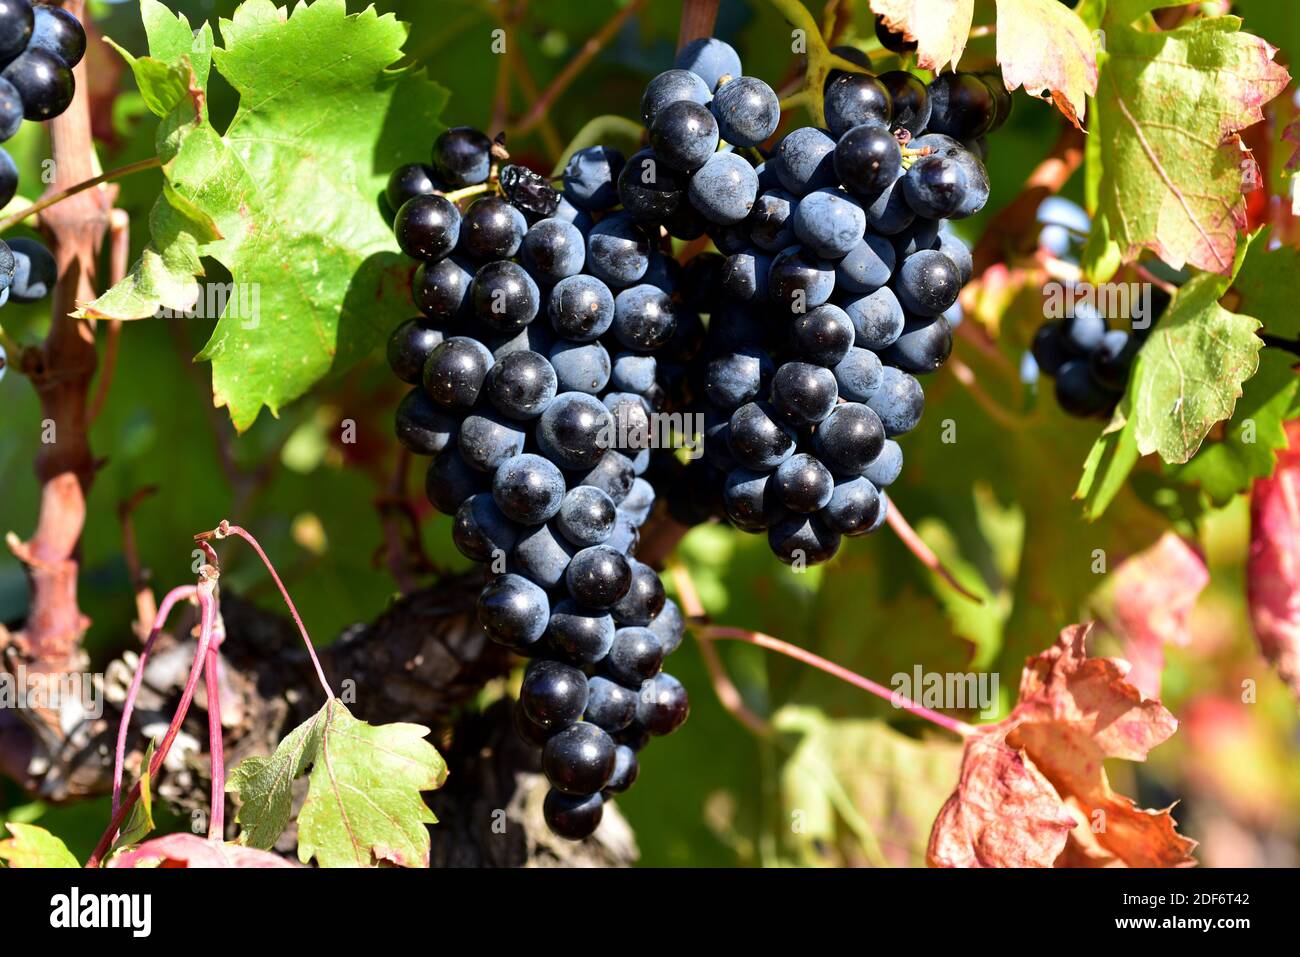 Common grape vine (Vitis vinifera) is a deciduous climber shrub native to Mediterranean Basin, central Europe and southwestern Asia. Grape of Stock Photo